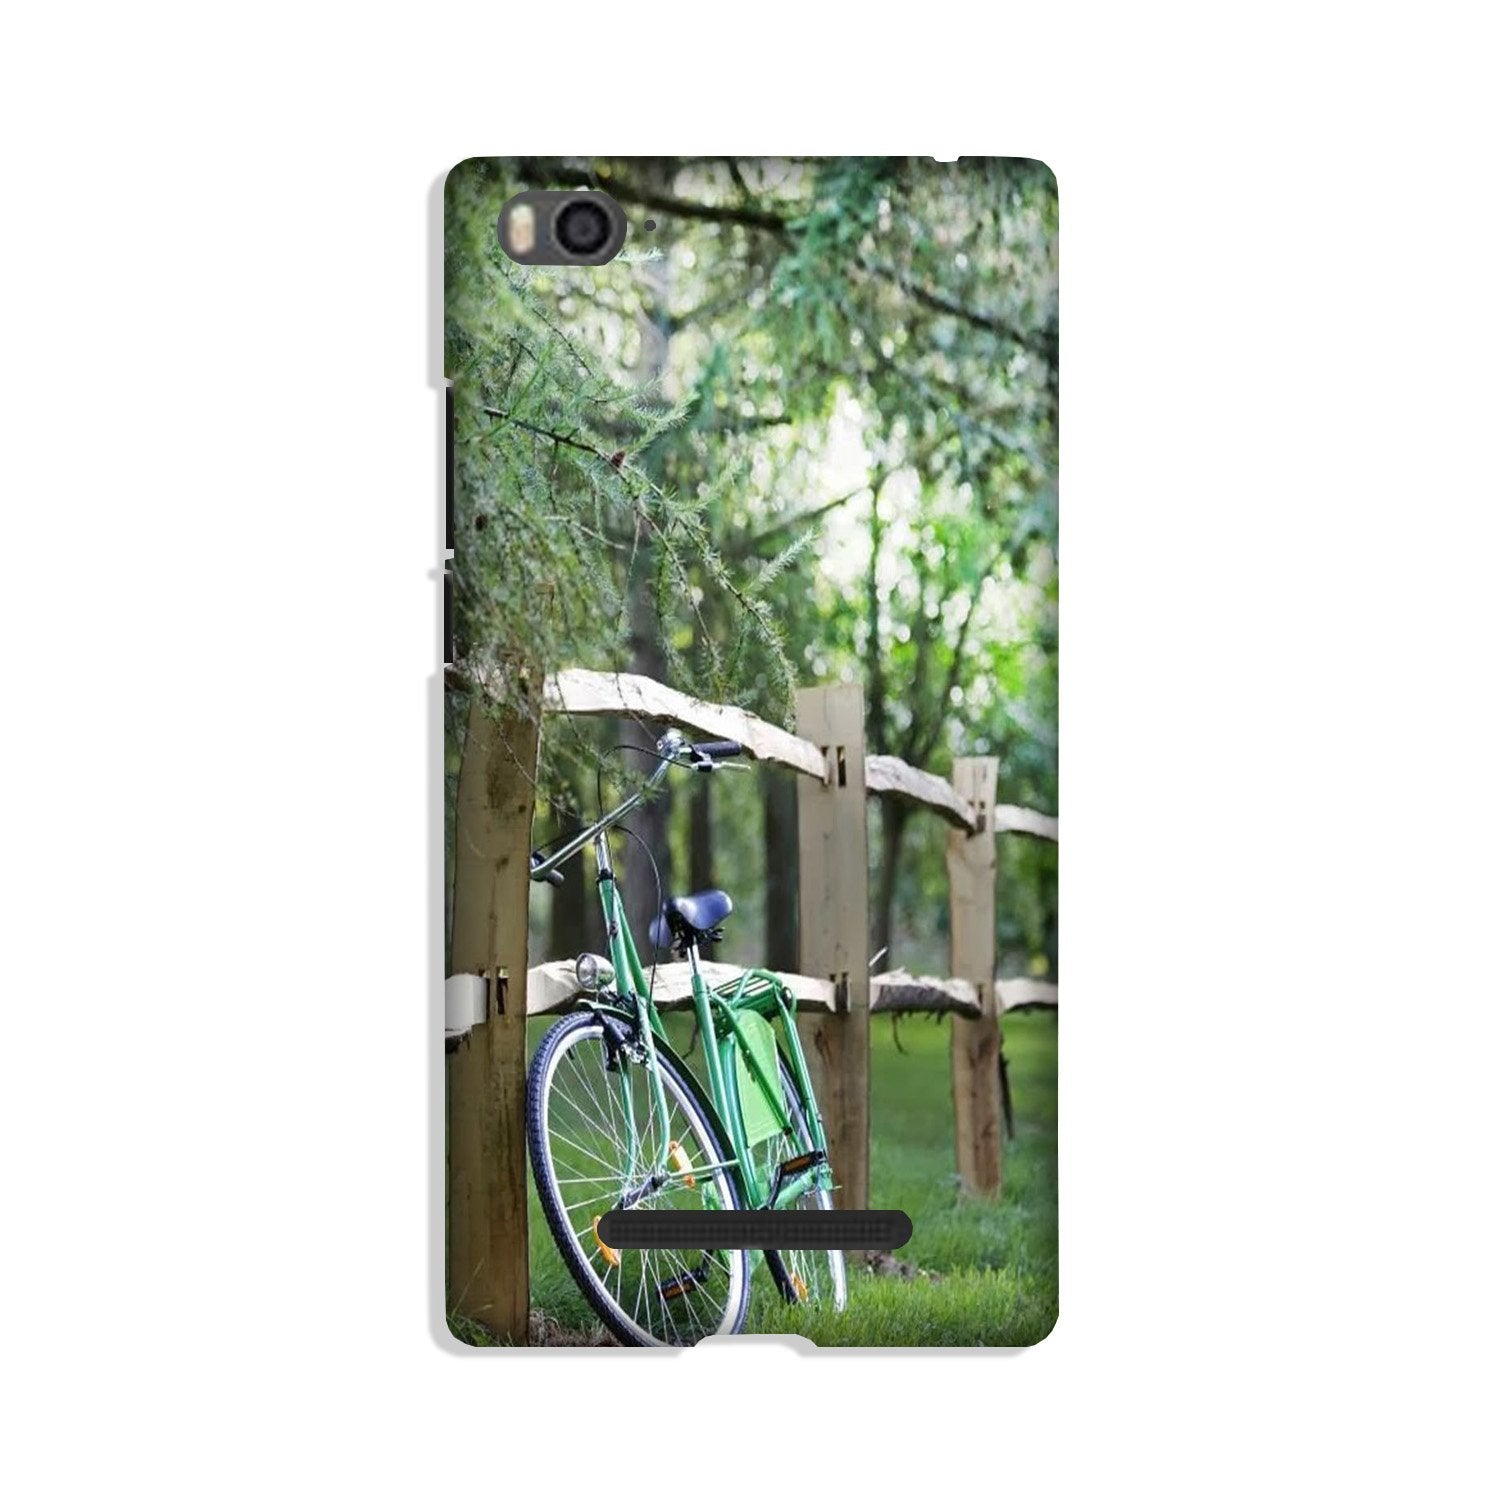 Bicycle Case for Xiaomi Mi 4i (Design No. 208)